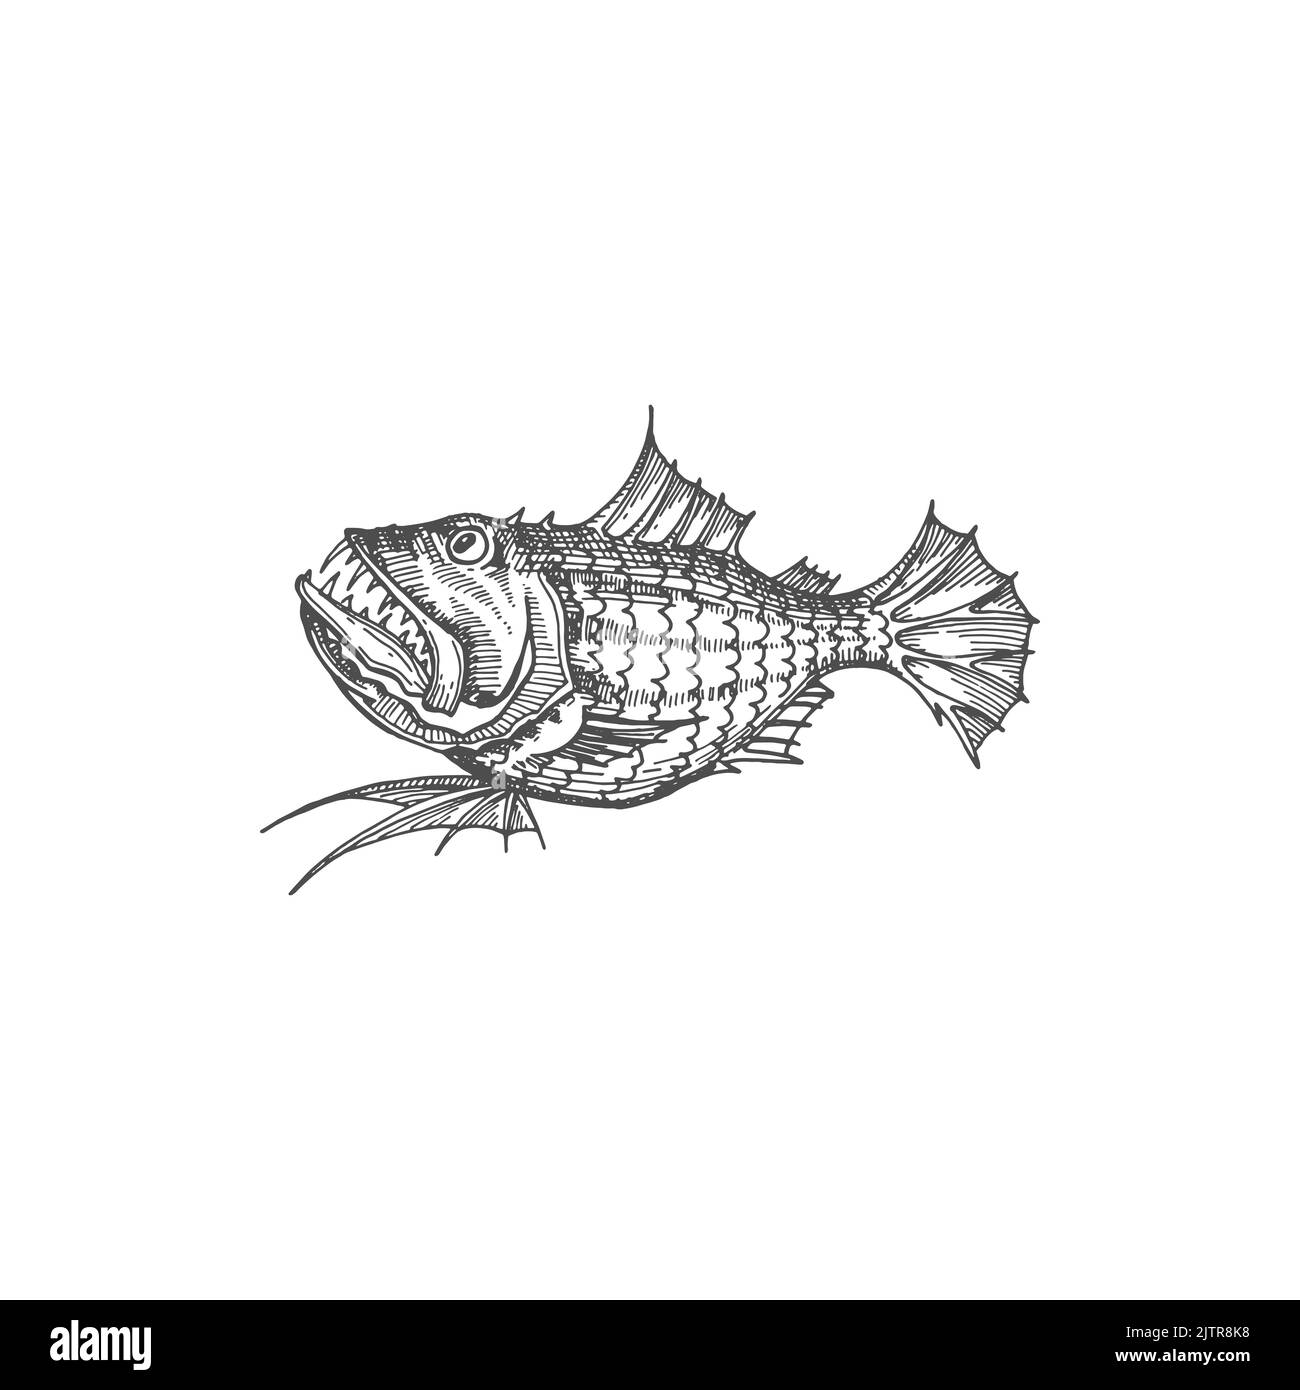 Blobfish hatchet fish isolated giant oarfish monochrome sketch icon. Vector barreleye sloane viperfish, deep sea ocean marine animal with sharp teeth. Wildlife fangtooth anoplogaster monkfish Stock Vector